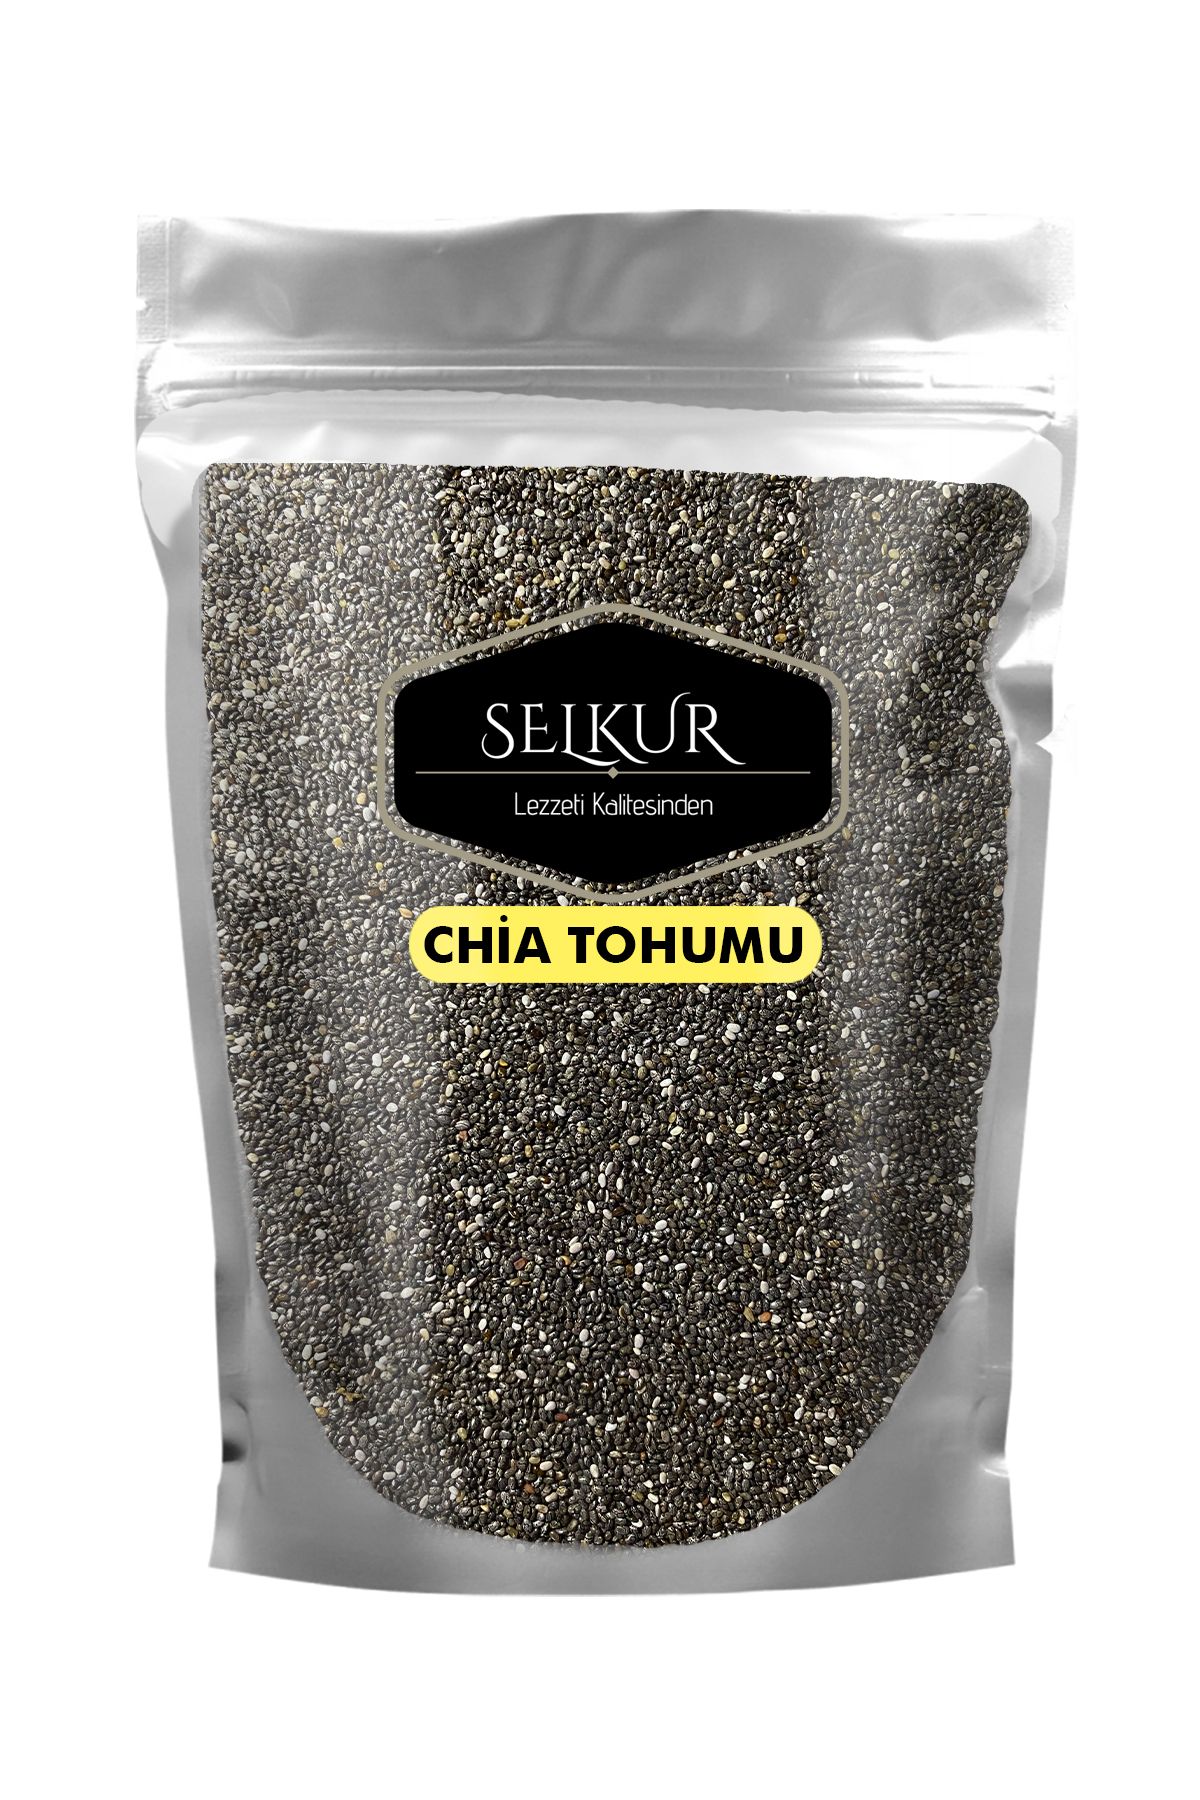 SELKUR Chia Tohumu 200gr Glutensiz & Organik Chia Seeds